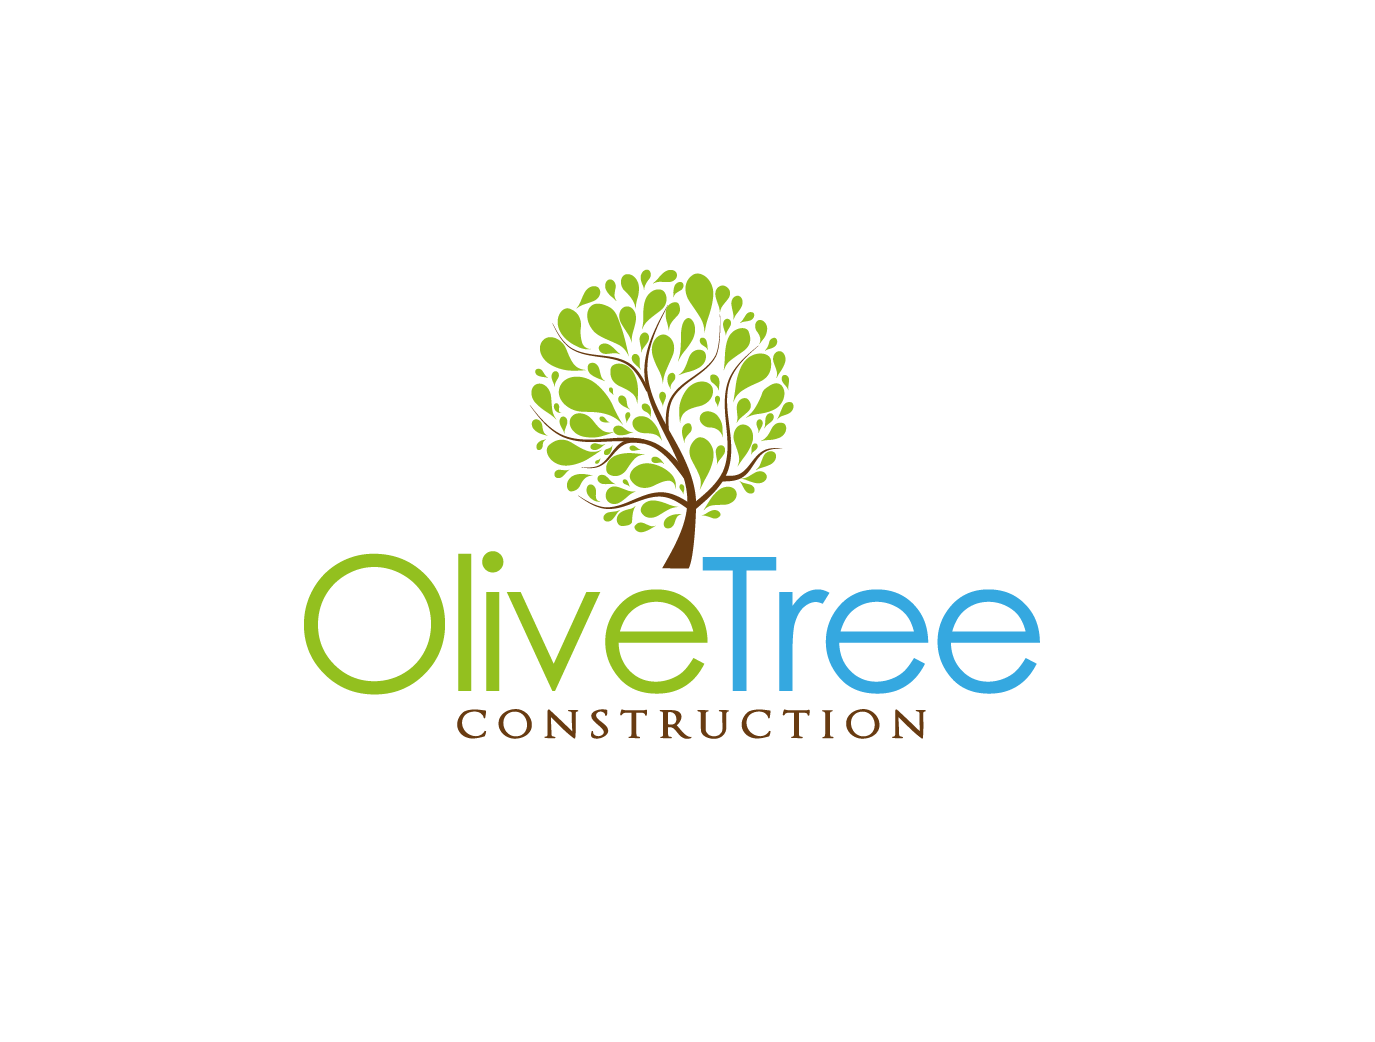 Olive Tree Logo - Modern, Professional, Construction Logo Design for Olive Tree ...